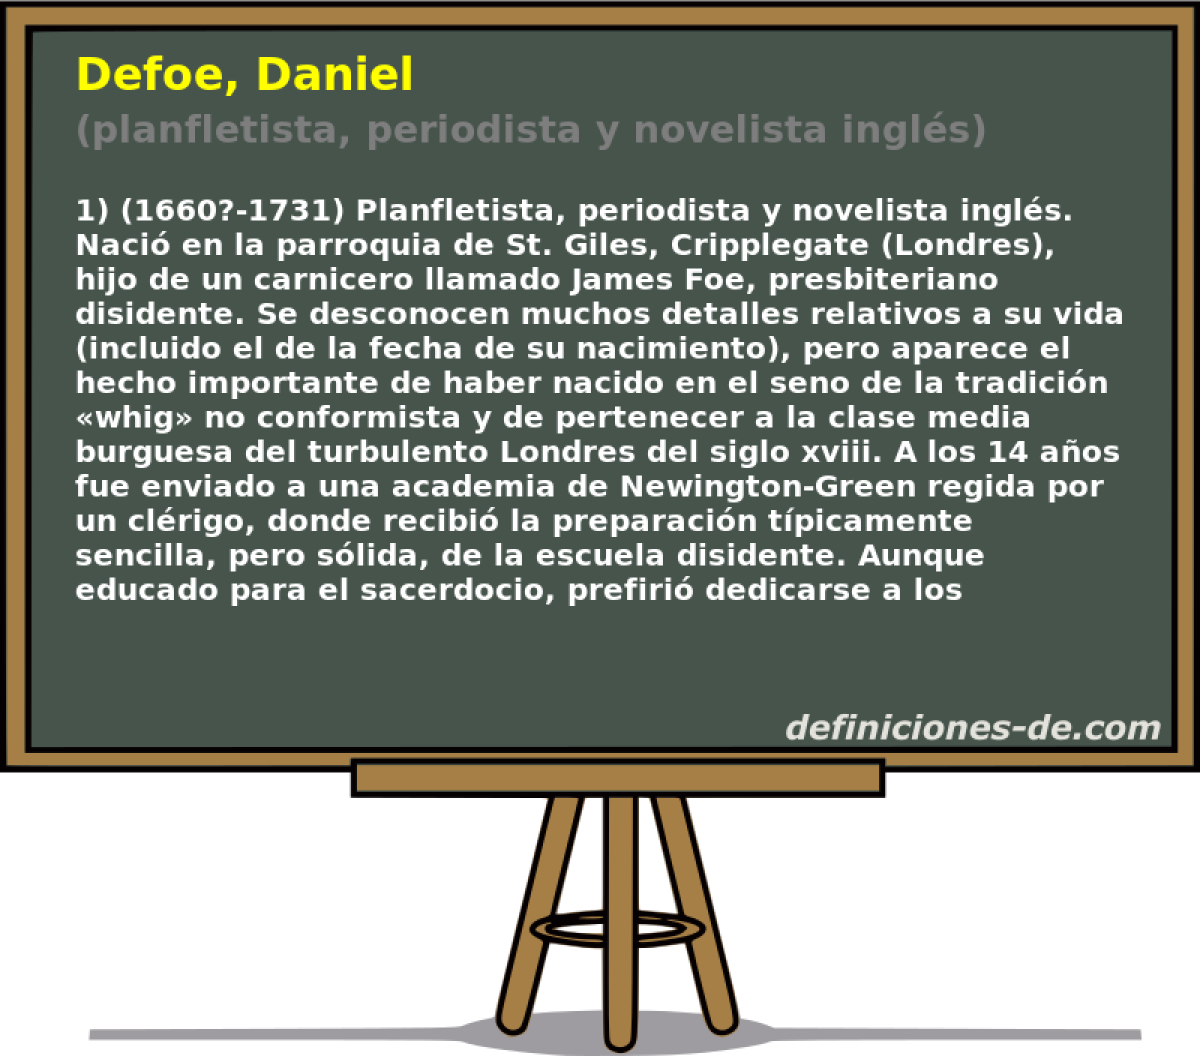 Defoe, Daniel (planfletista, periodista y novelista ingls)